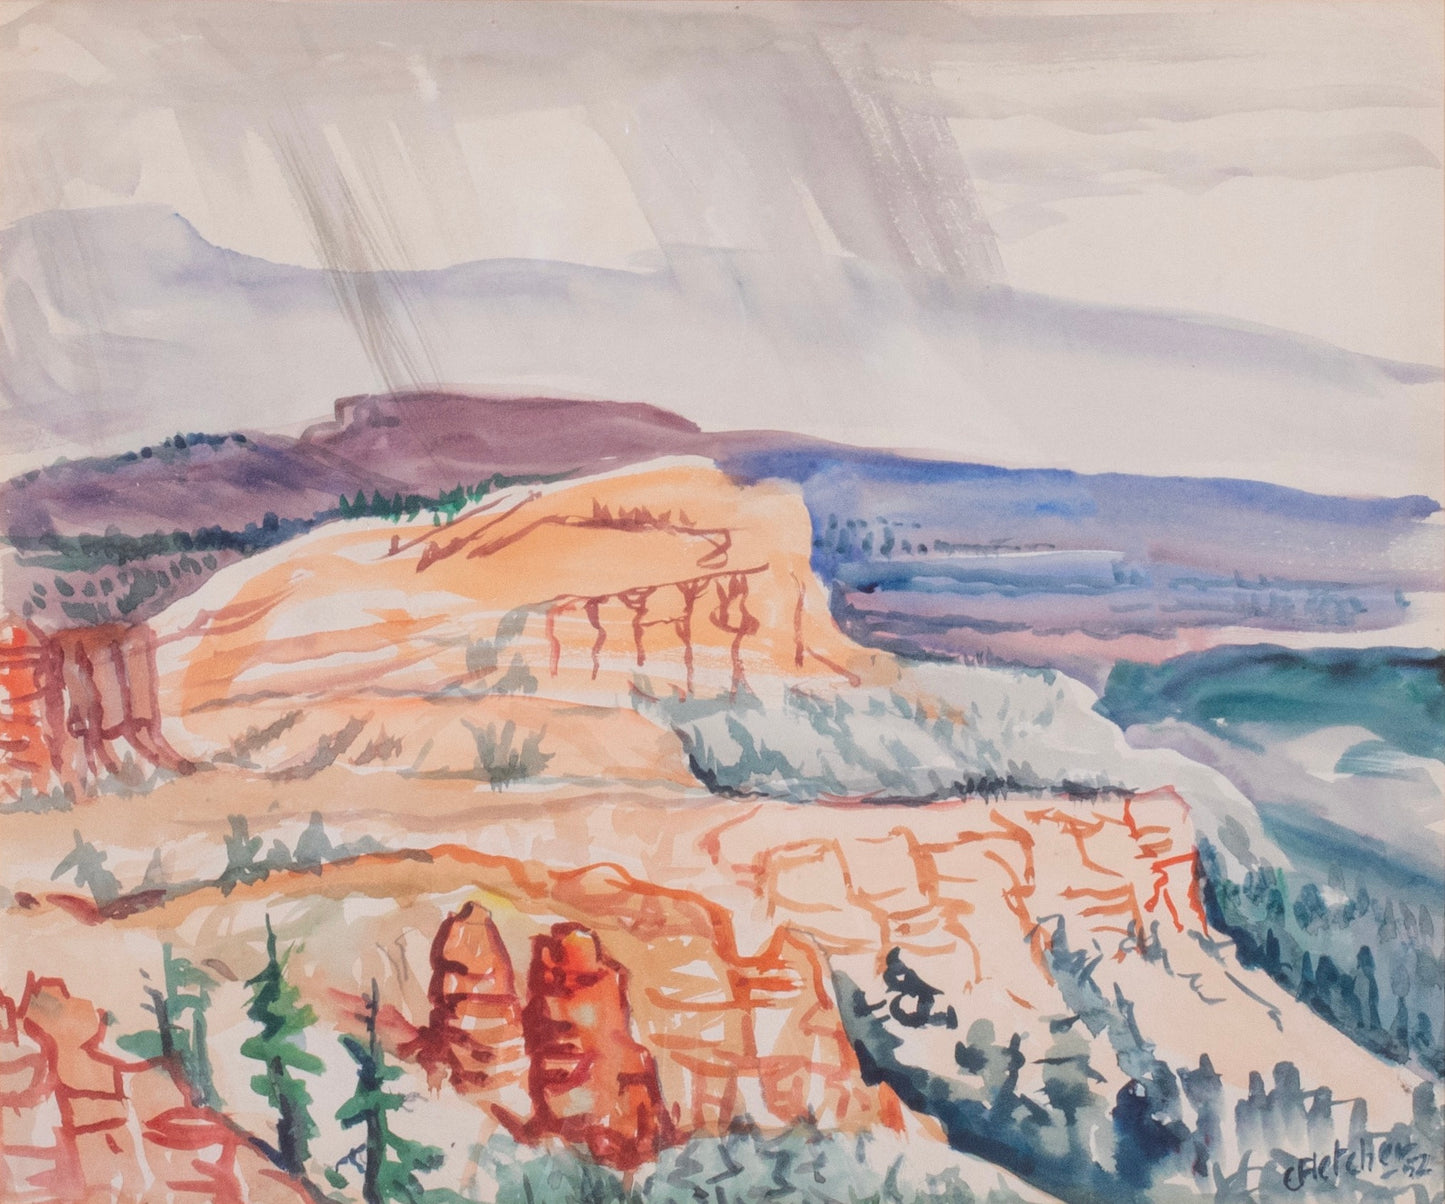 Calvin Fletcher - Southern Utah Cliffs 1952 14" x 17"